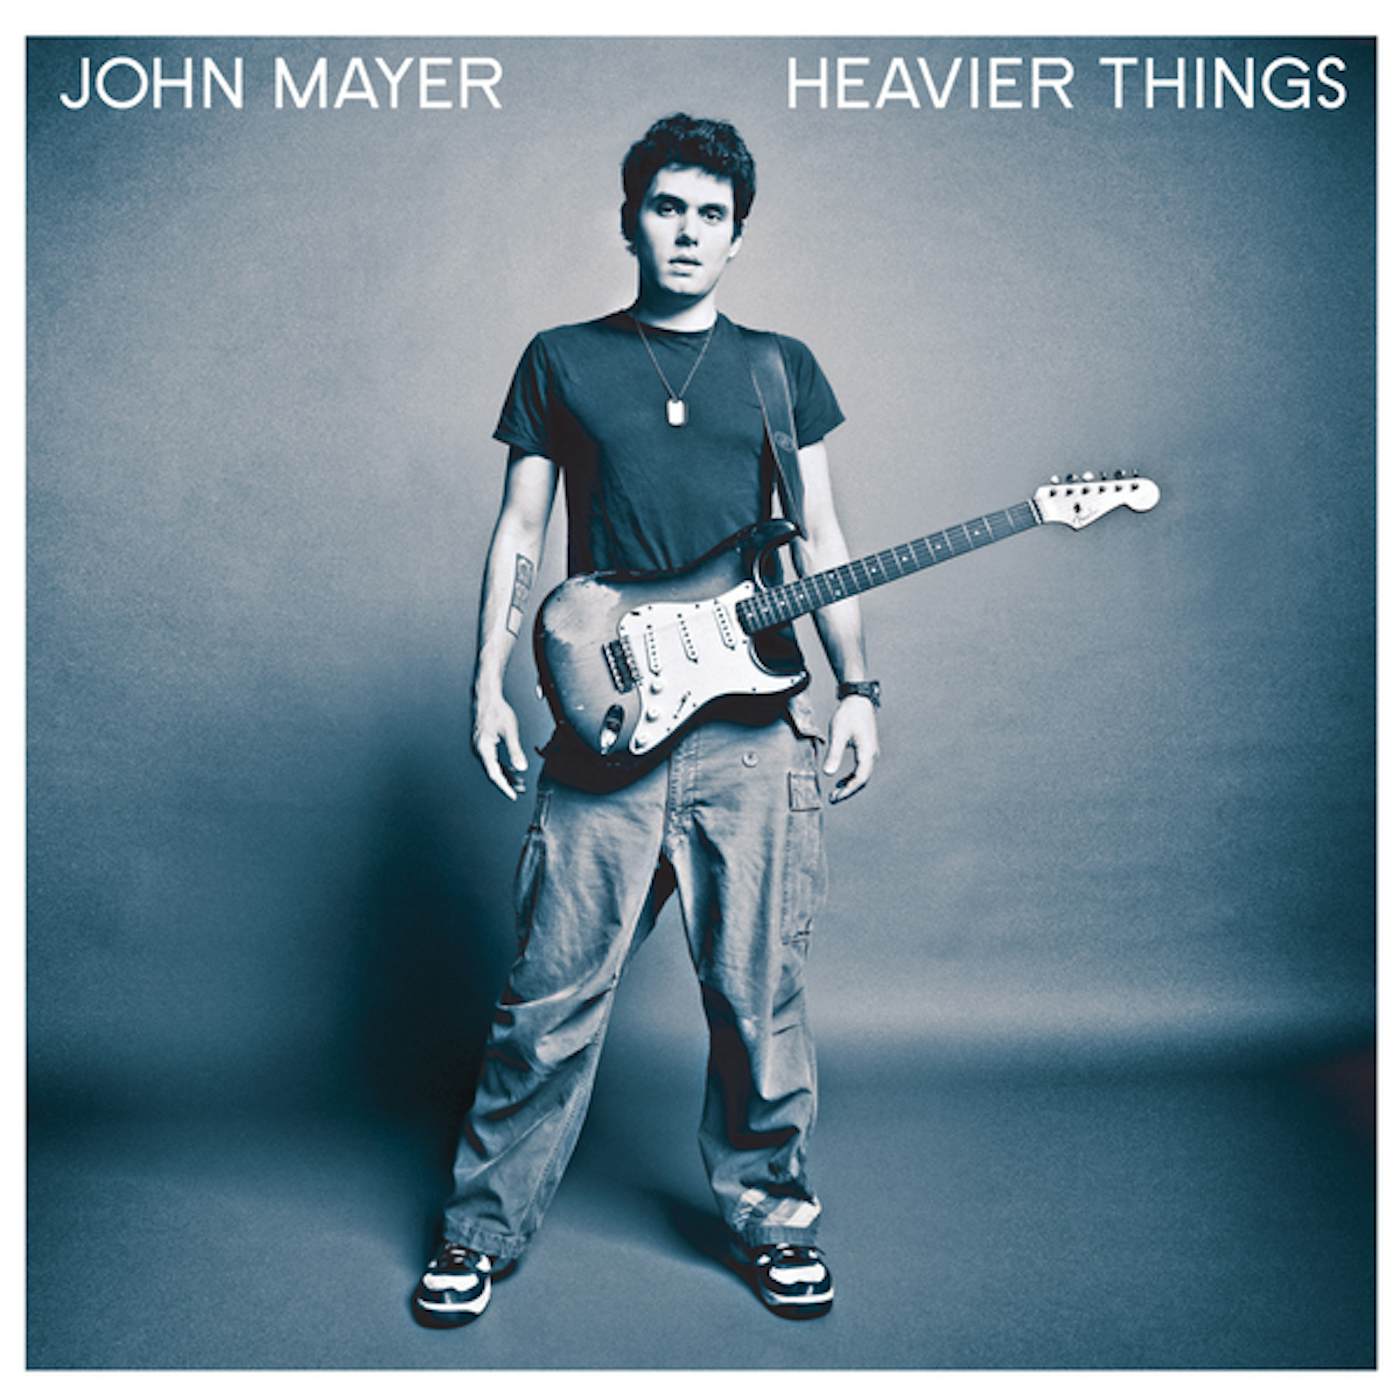 John Mayer HEAVIER THINGS (180G) Vinyl Record